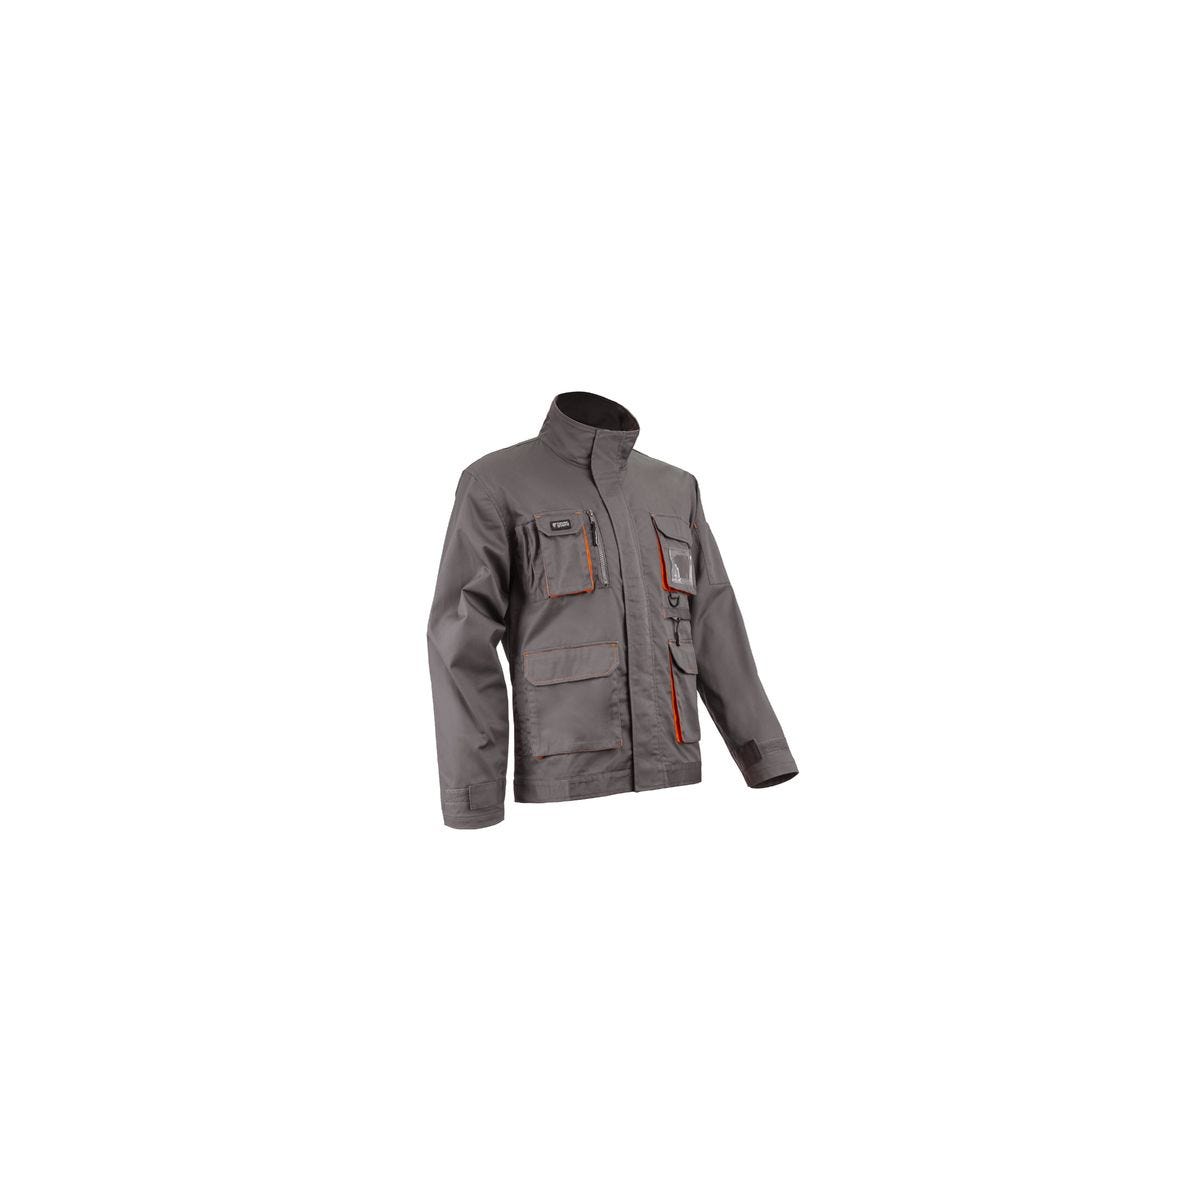 PADDOCK II Veste, gris/orange, 60%CO/40%PES, 245g/m² - COVERGUARD - Taille S 0